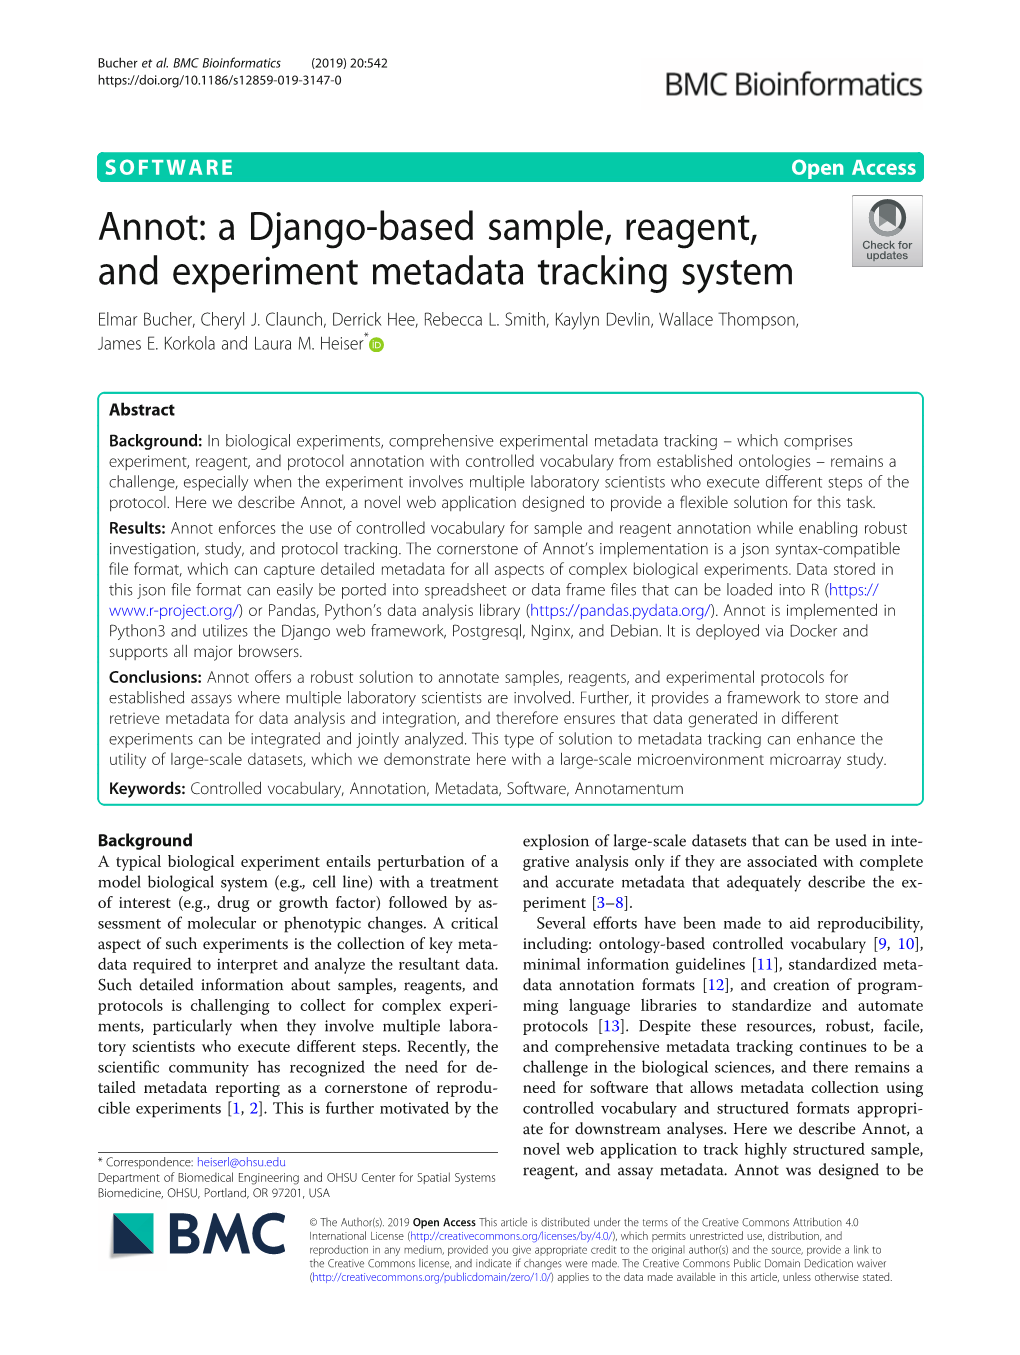 Annot: a Django-Based Sample, Reagent, and Experiment Metadata Tracking System Elmar Bucher, Cheryl J